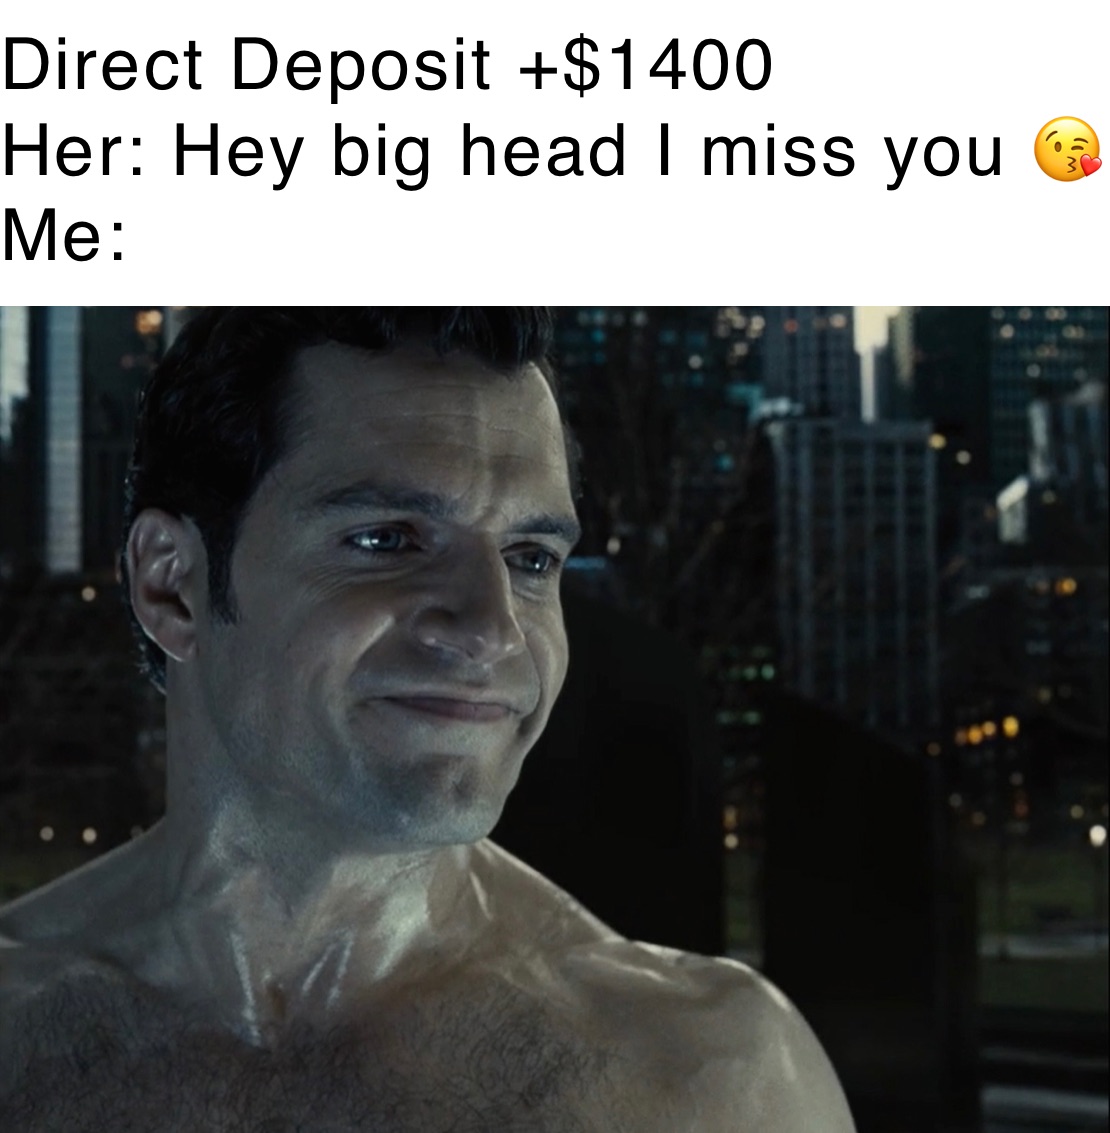 Direct Deposit +$1400
Her: Hey big head I miss you 😘
Me: 